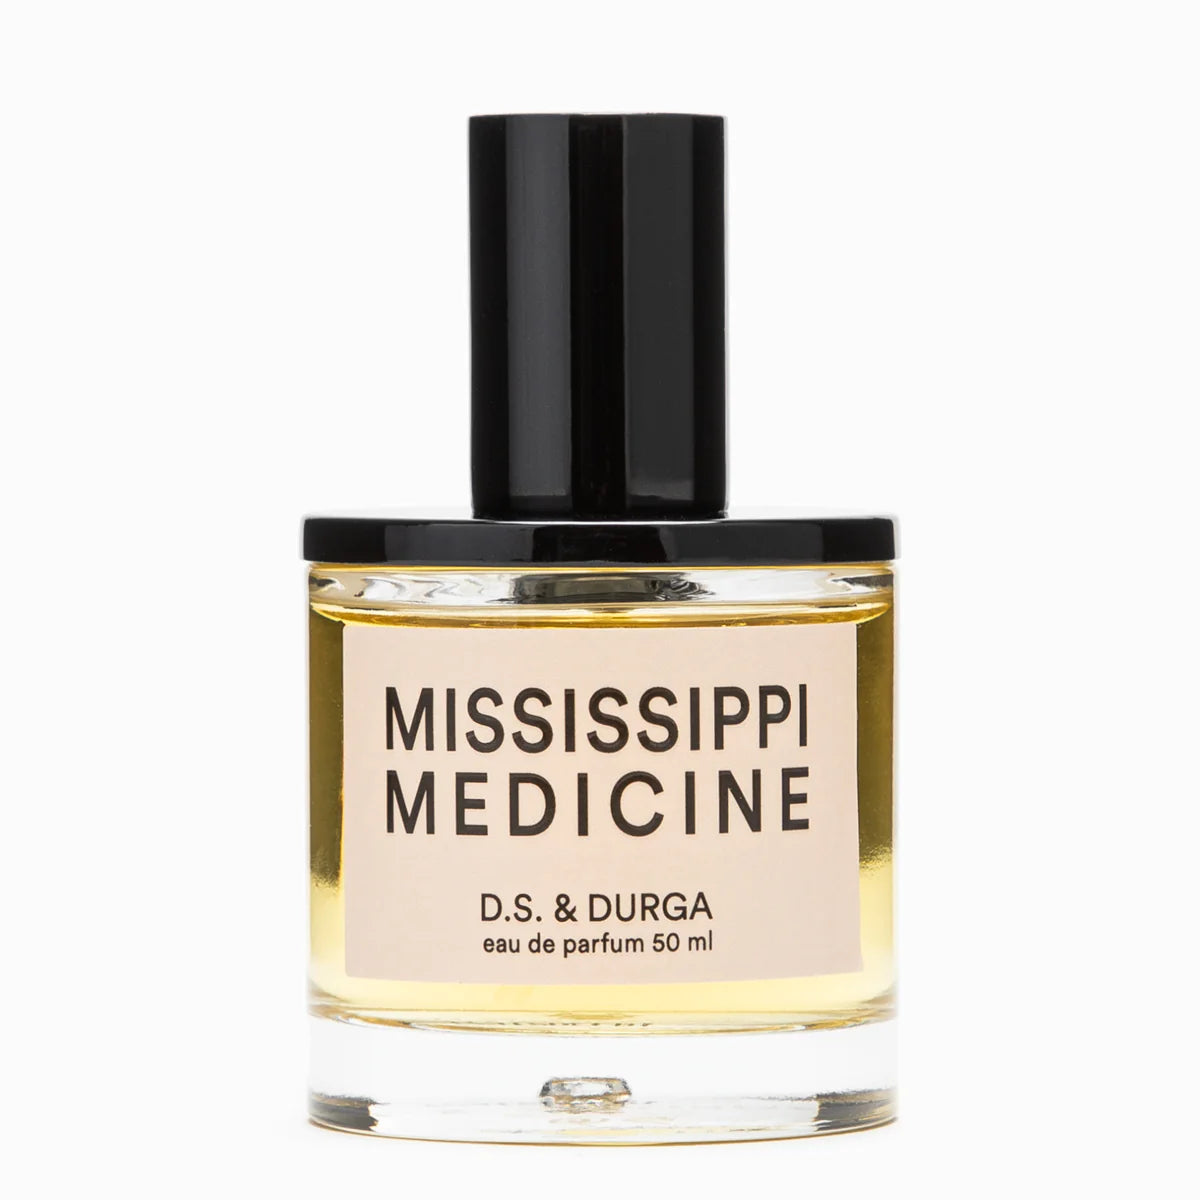 D.s. &amp; durga Mississipi Medicine Eau de parfum - 50 ml